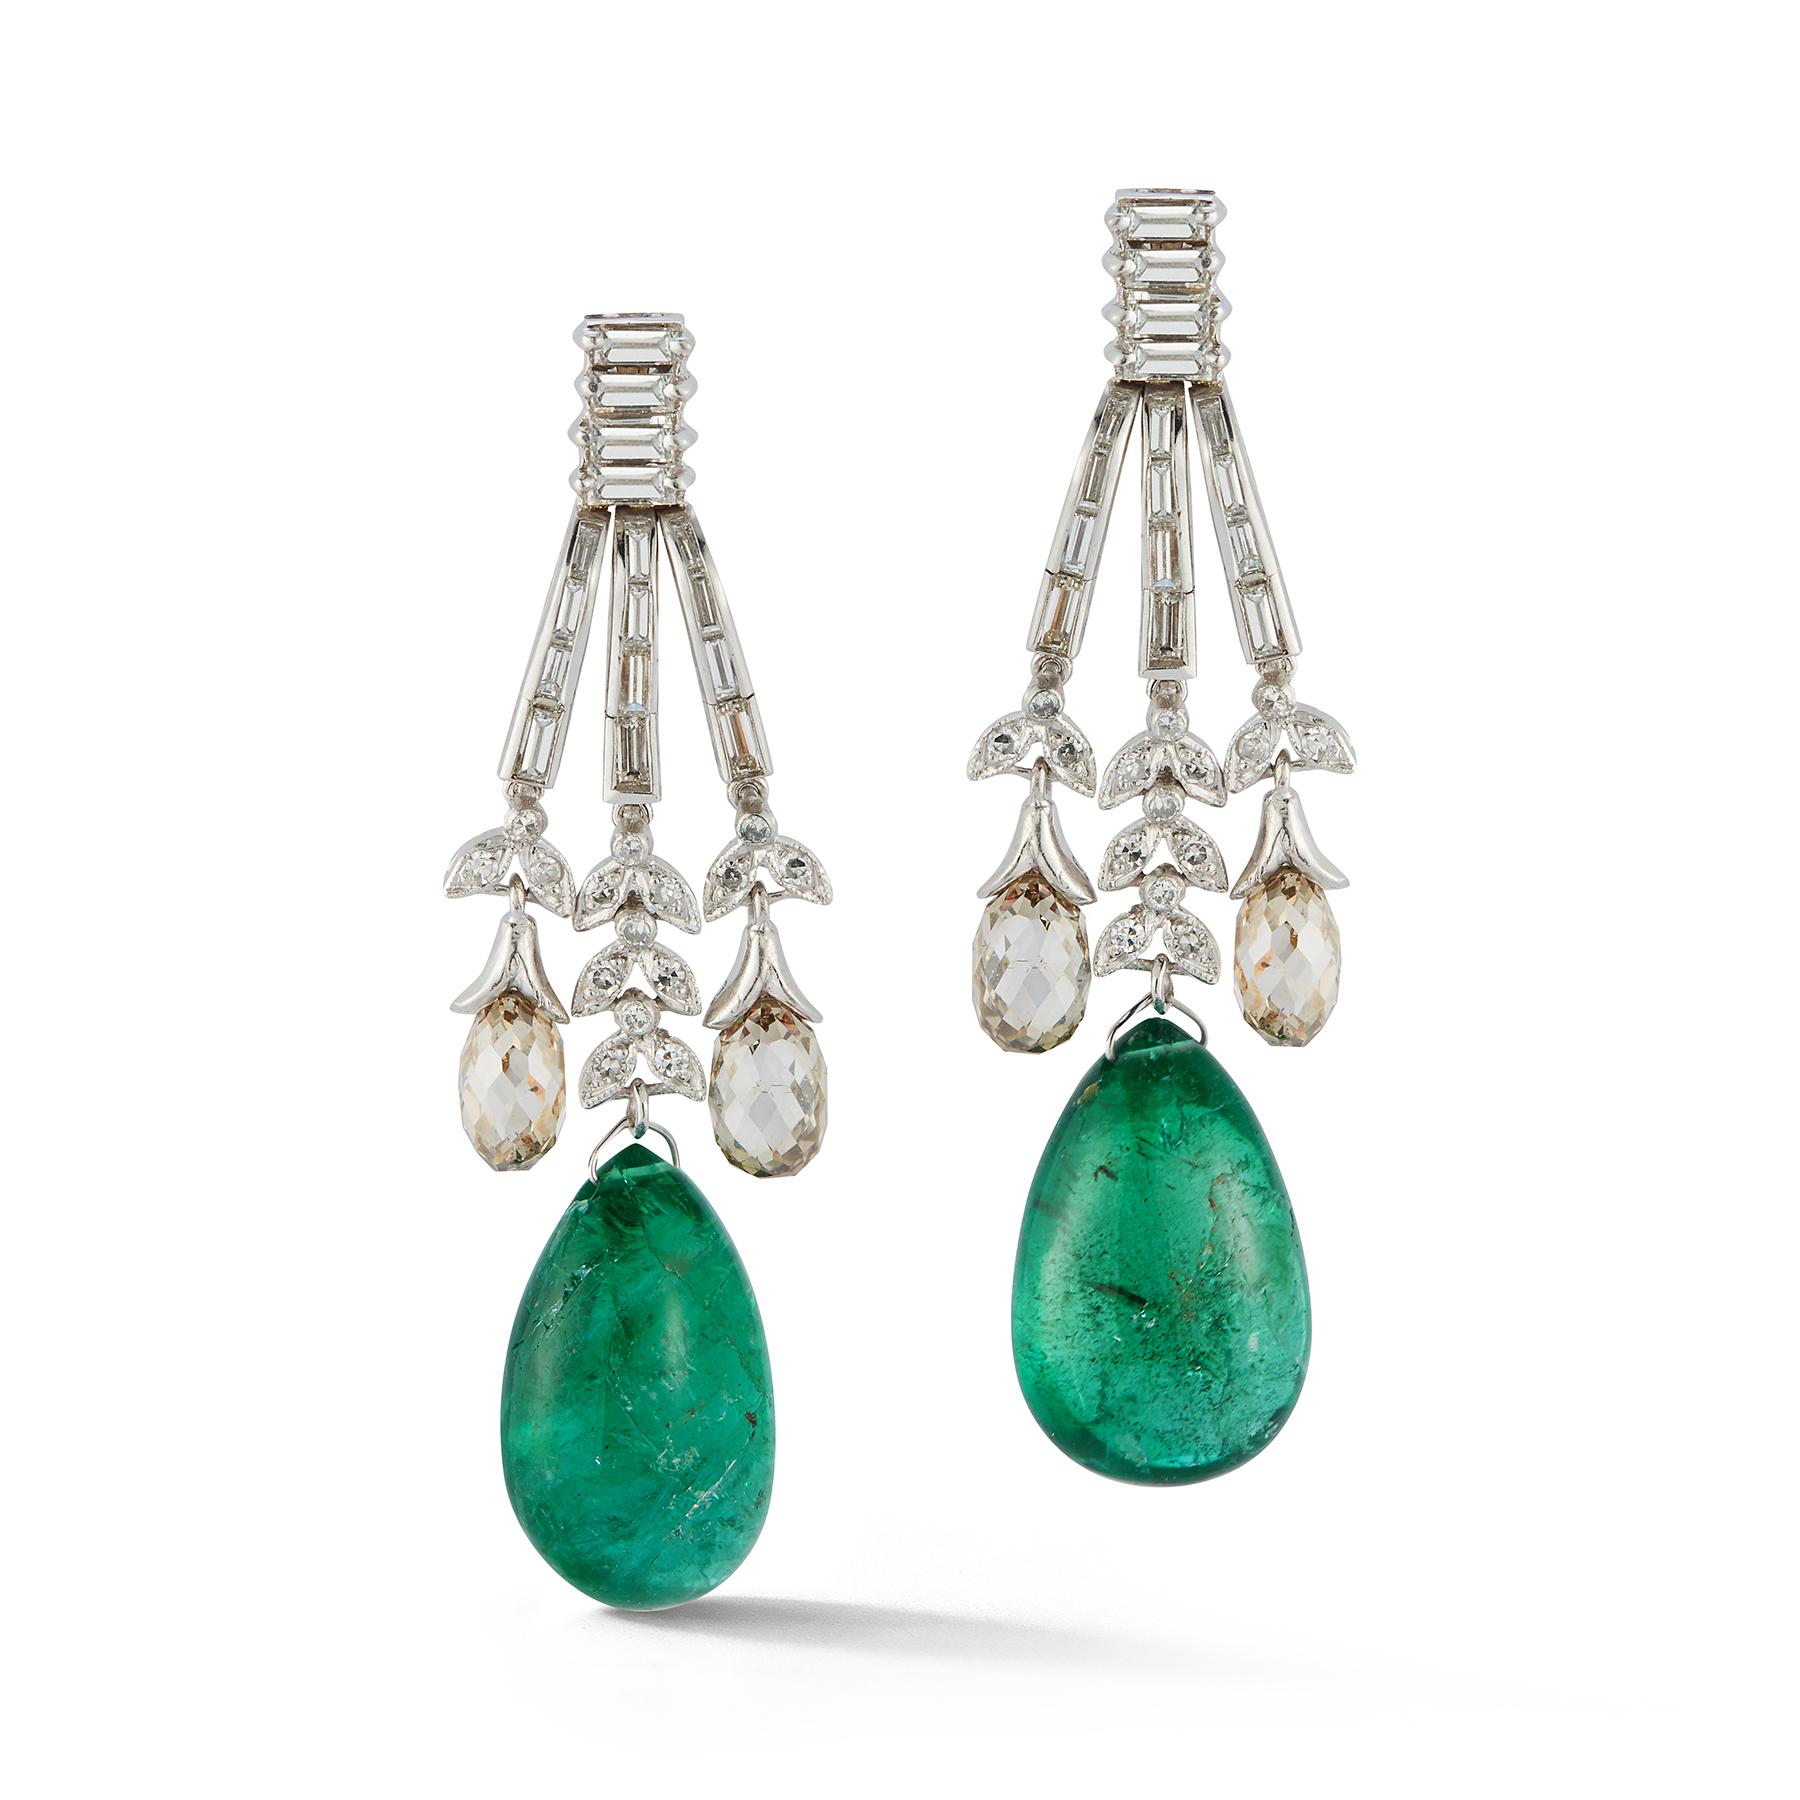 Cabochon Emerald & Briolette Diamond Chandelier Earrings 
 
2 cabochon emerald drops along with 2 dangling briolette diamonds, 16 baguette cut diamonds & 15 round cut diamonds.

Measurements: 1.75